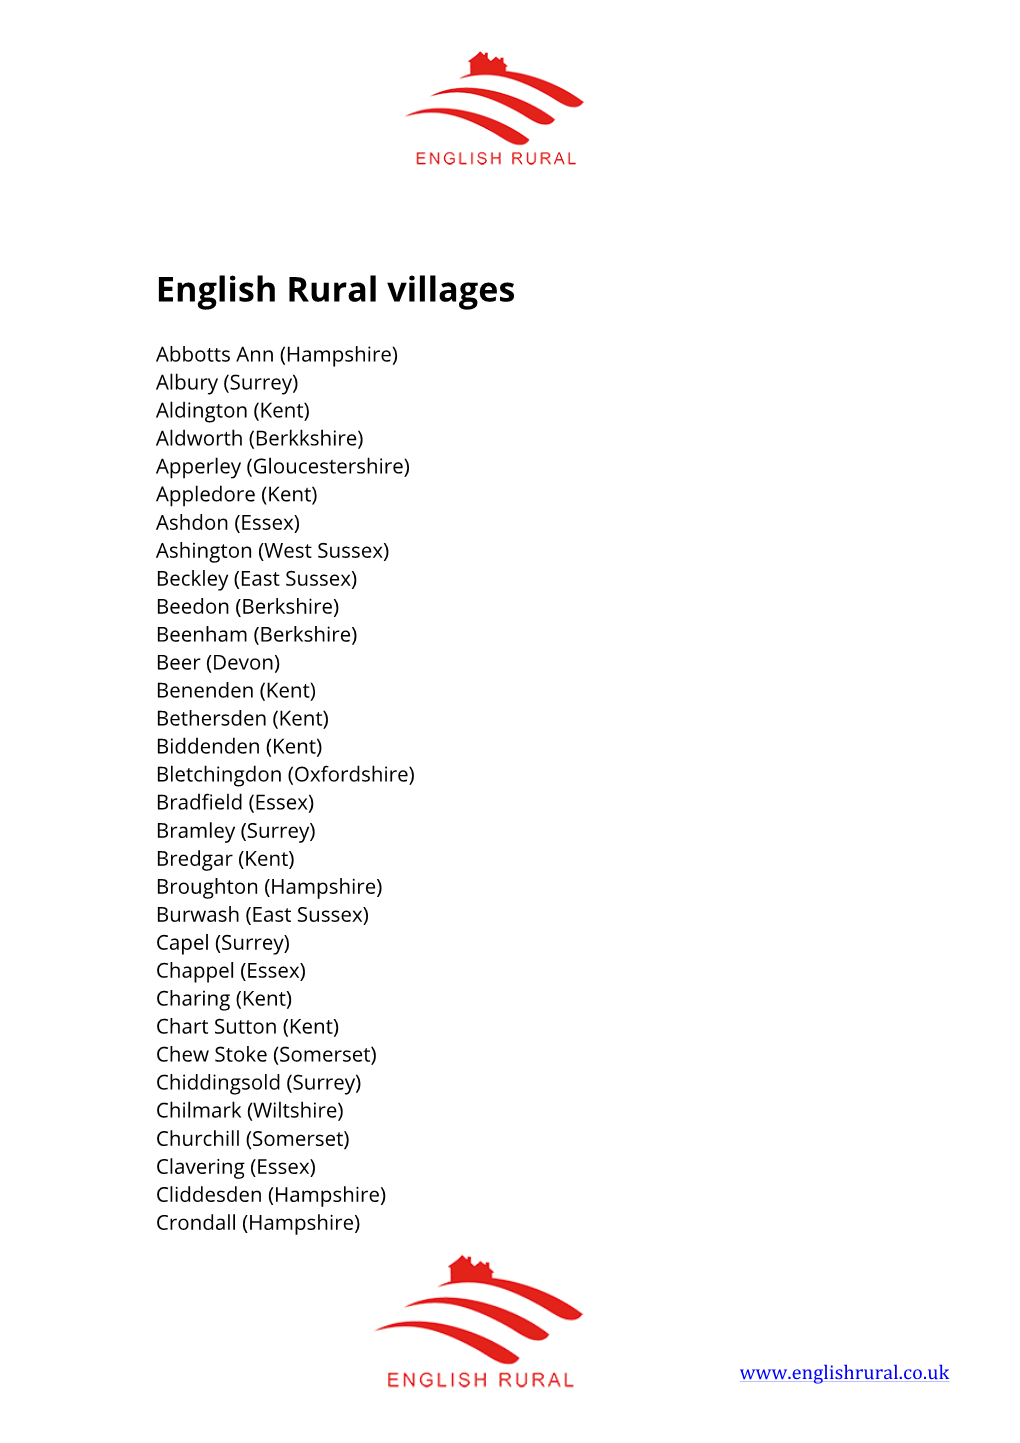 English Rural List of Villages